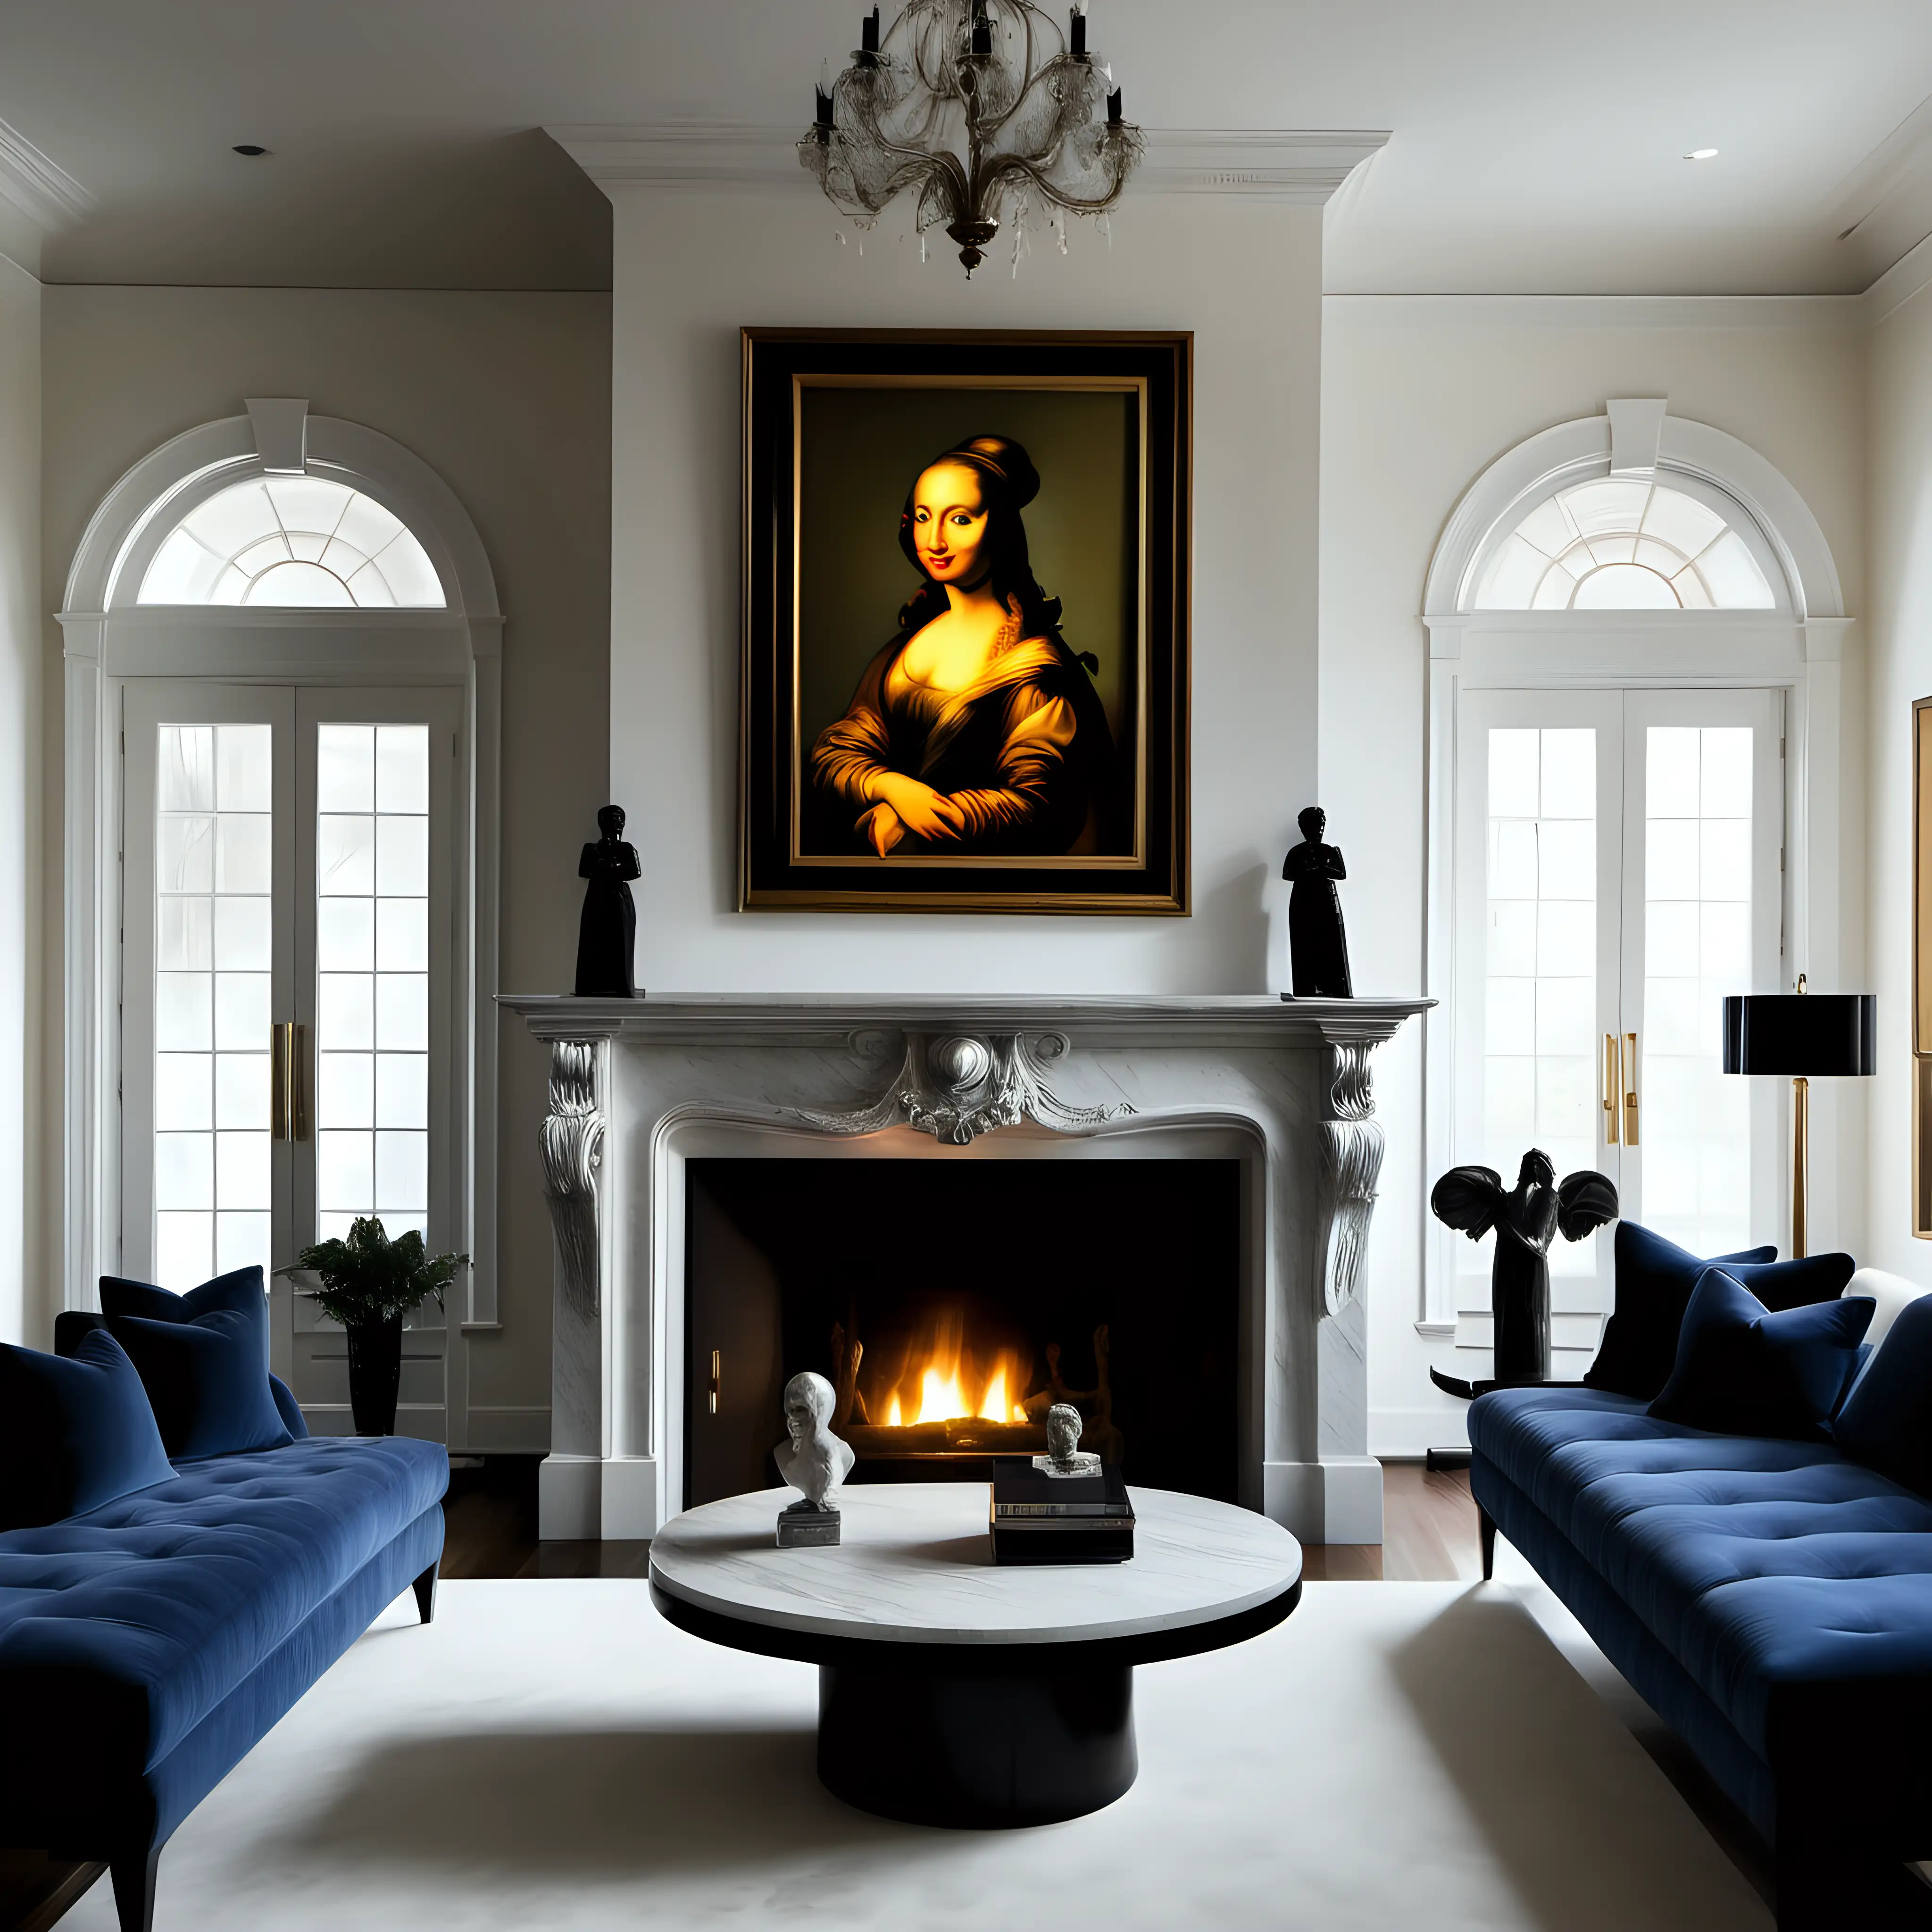 framed art in a multi-million dollar
 house over a fireplace. do not block the art 
